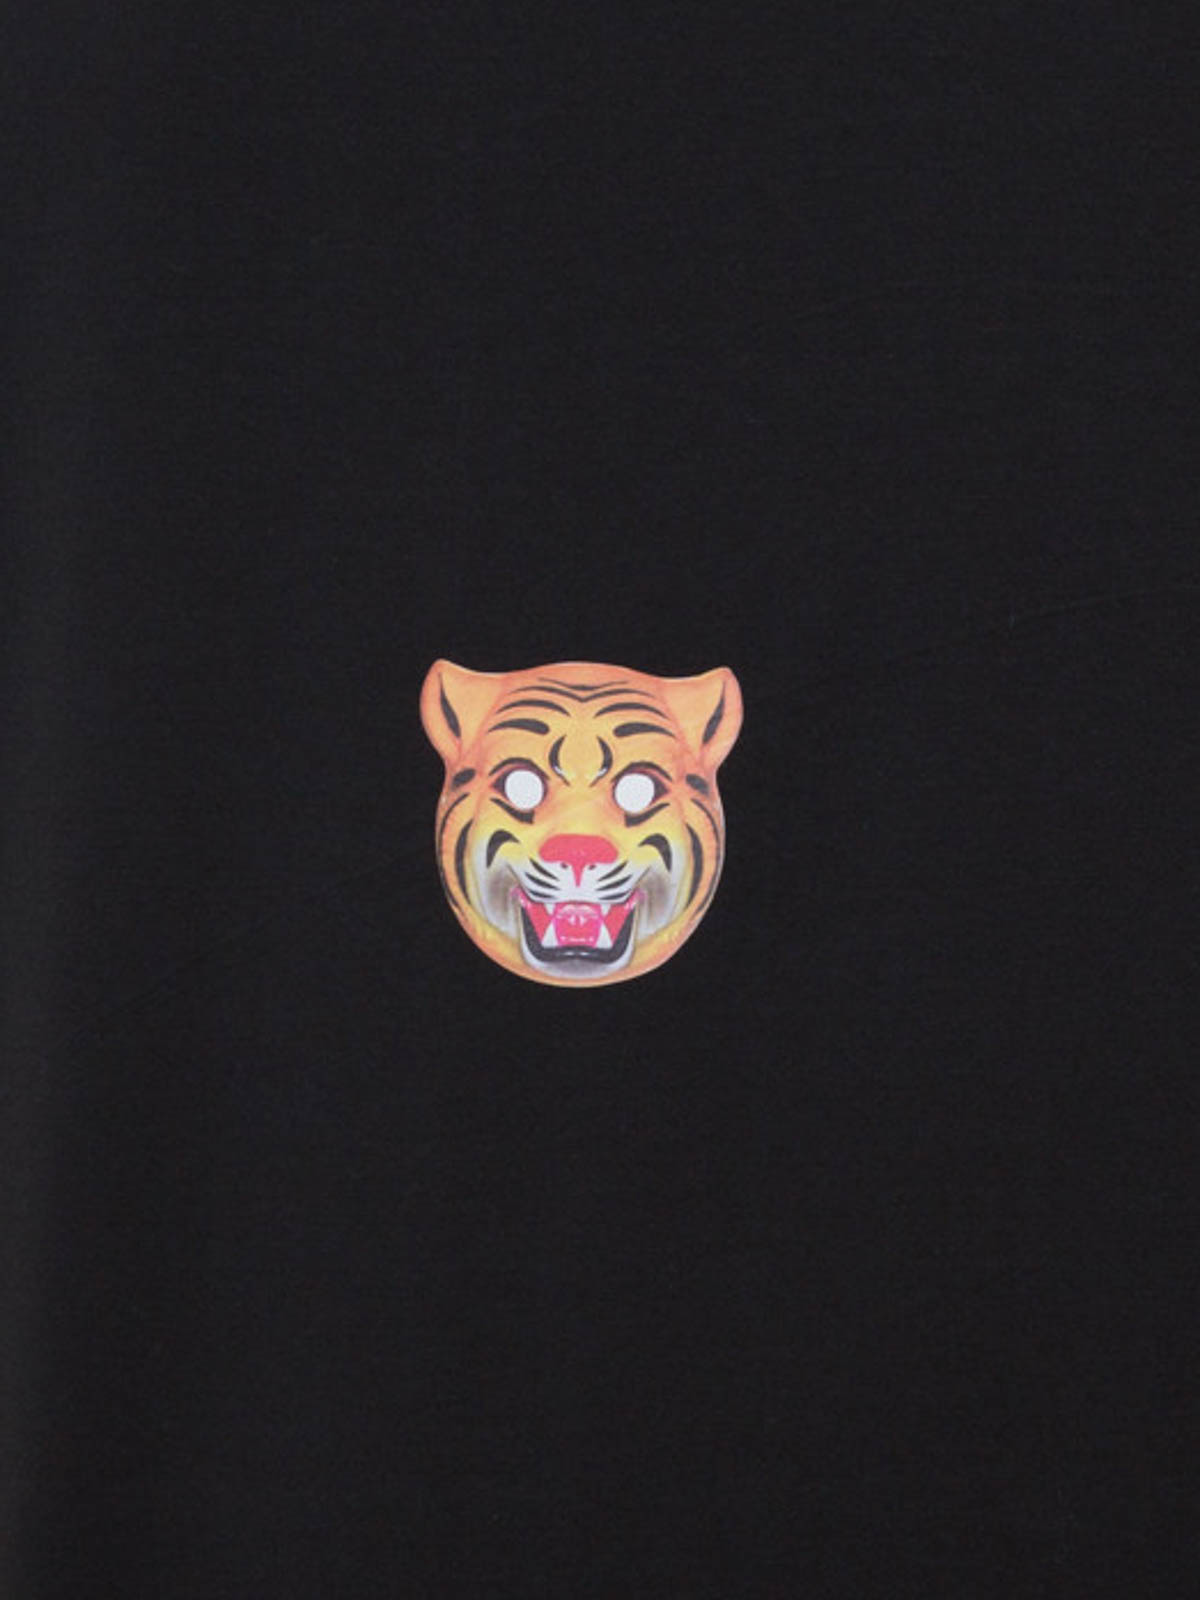 Kenzo Rubber Tiger Logo Cotton T-Shirt White Authentic